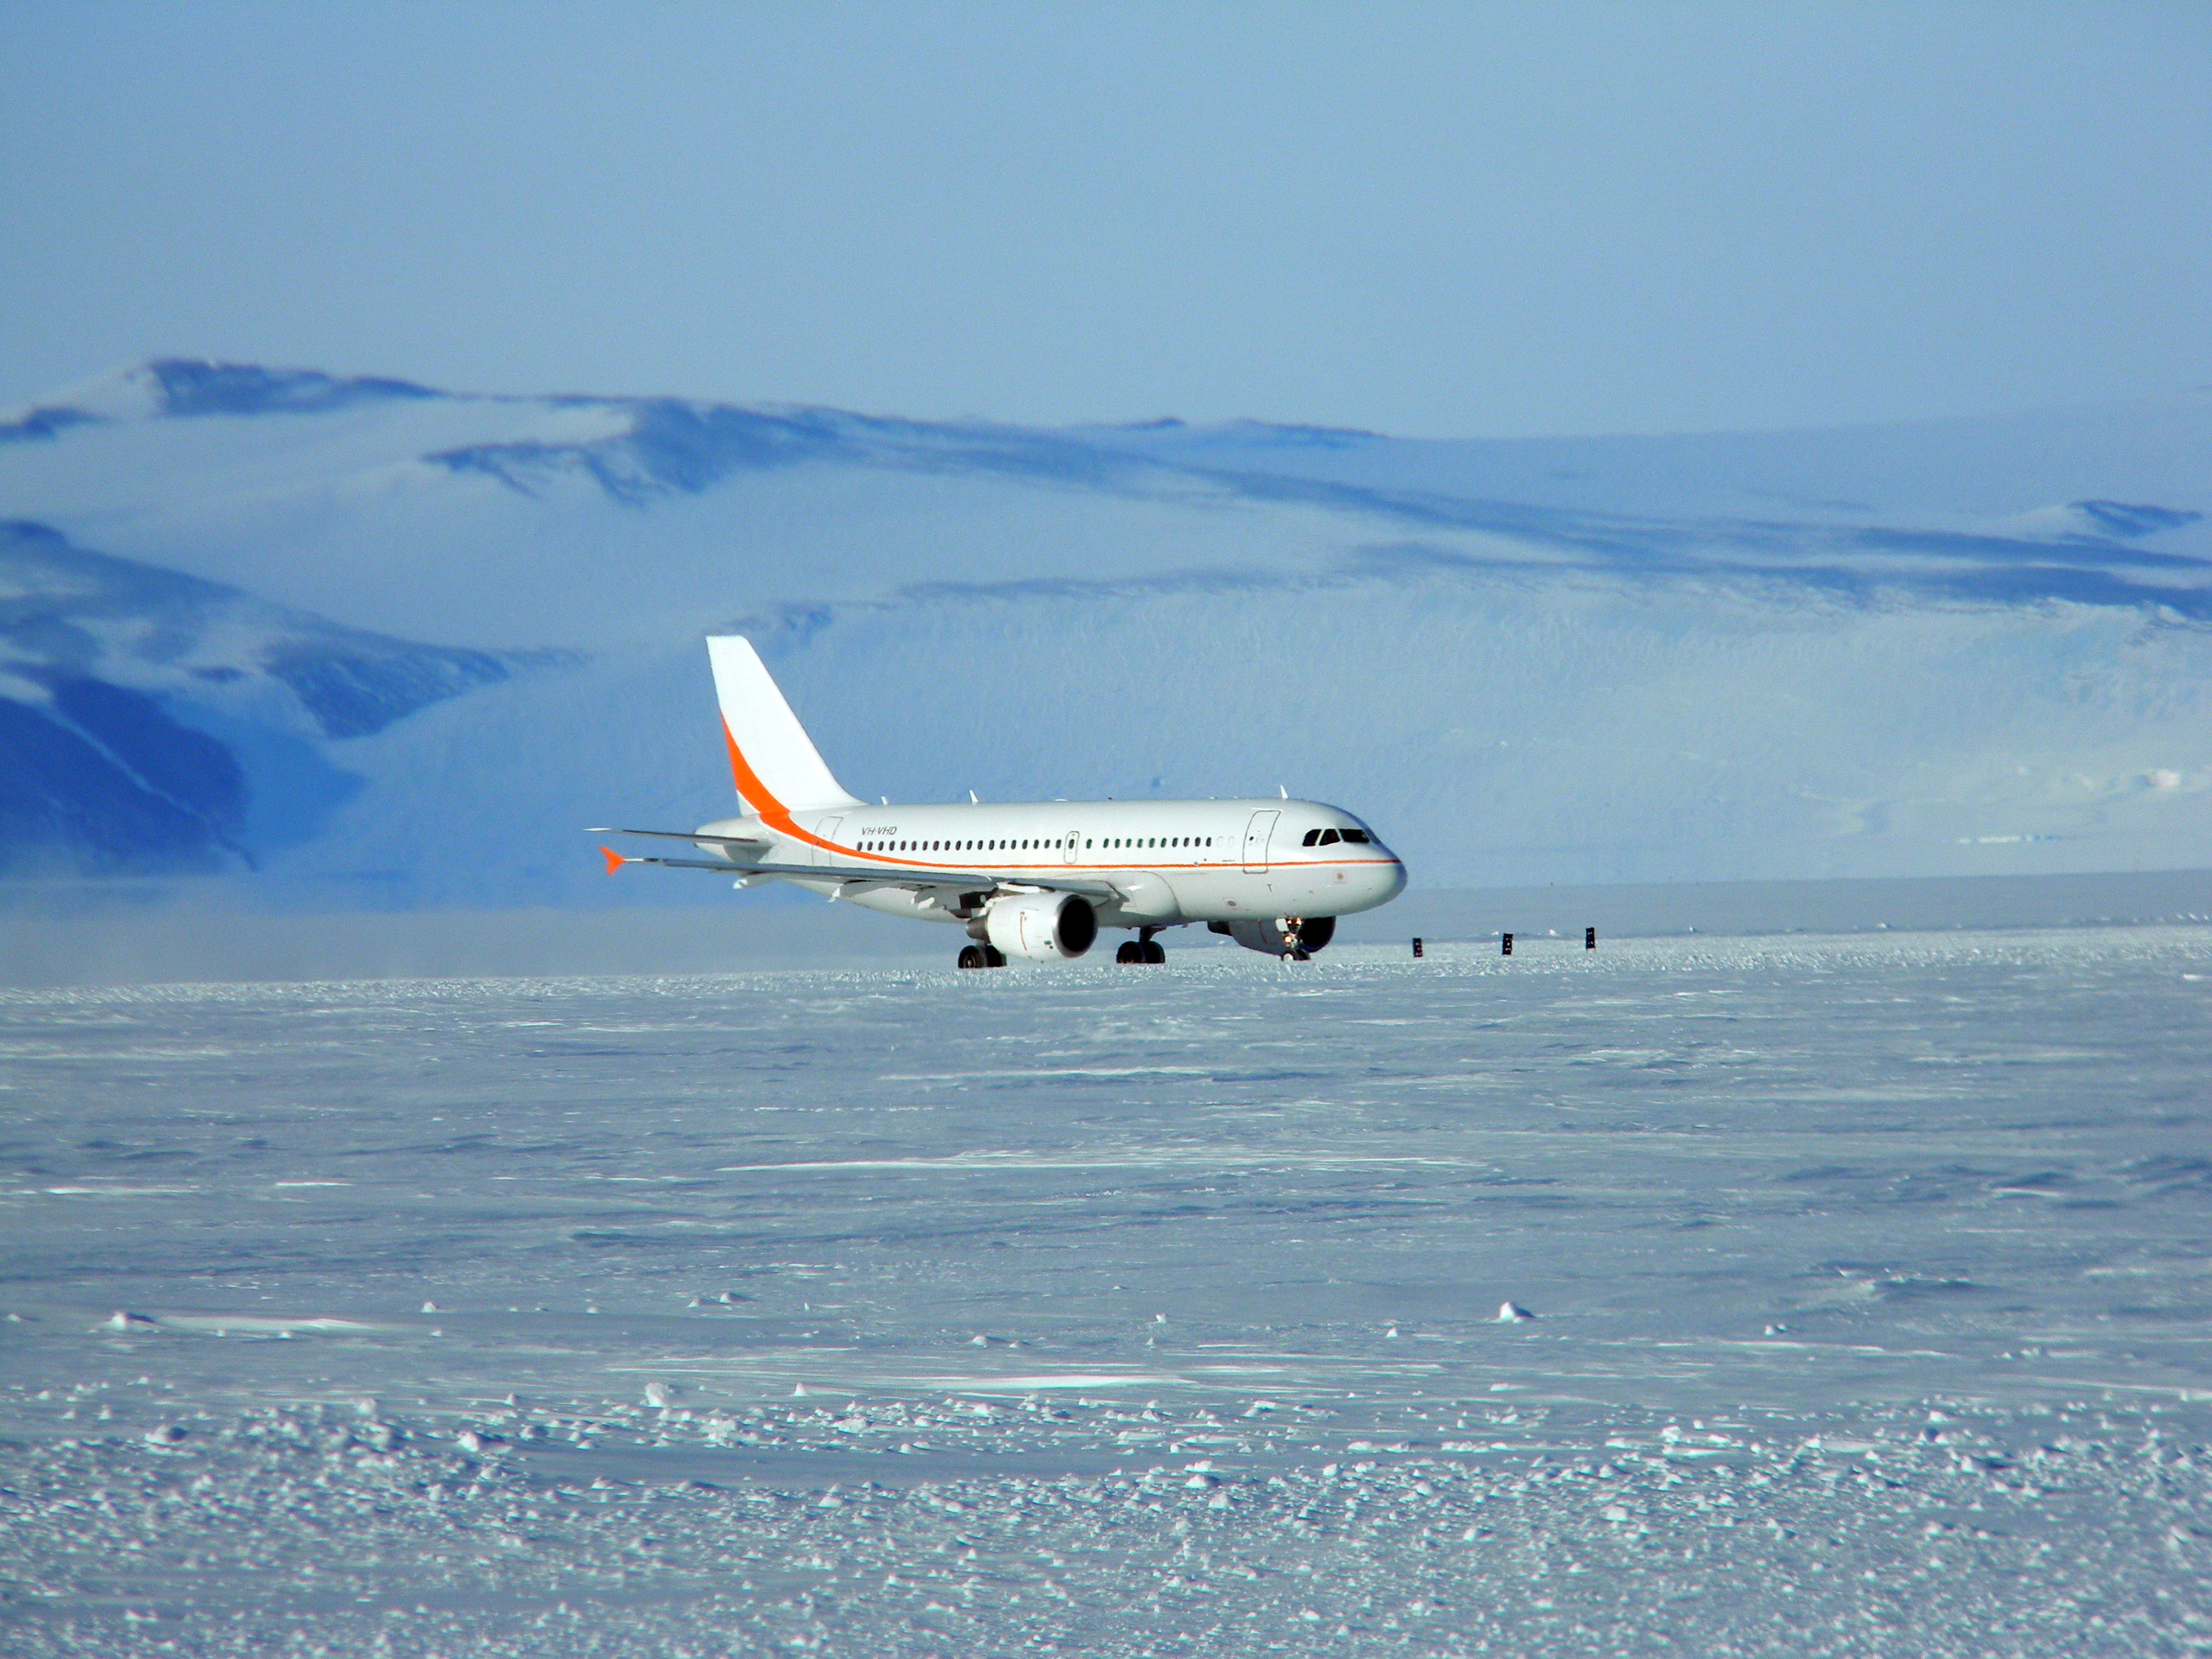 Airplane on ice.